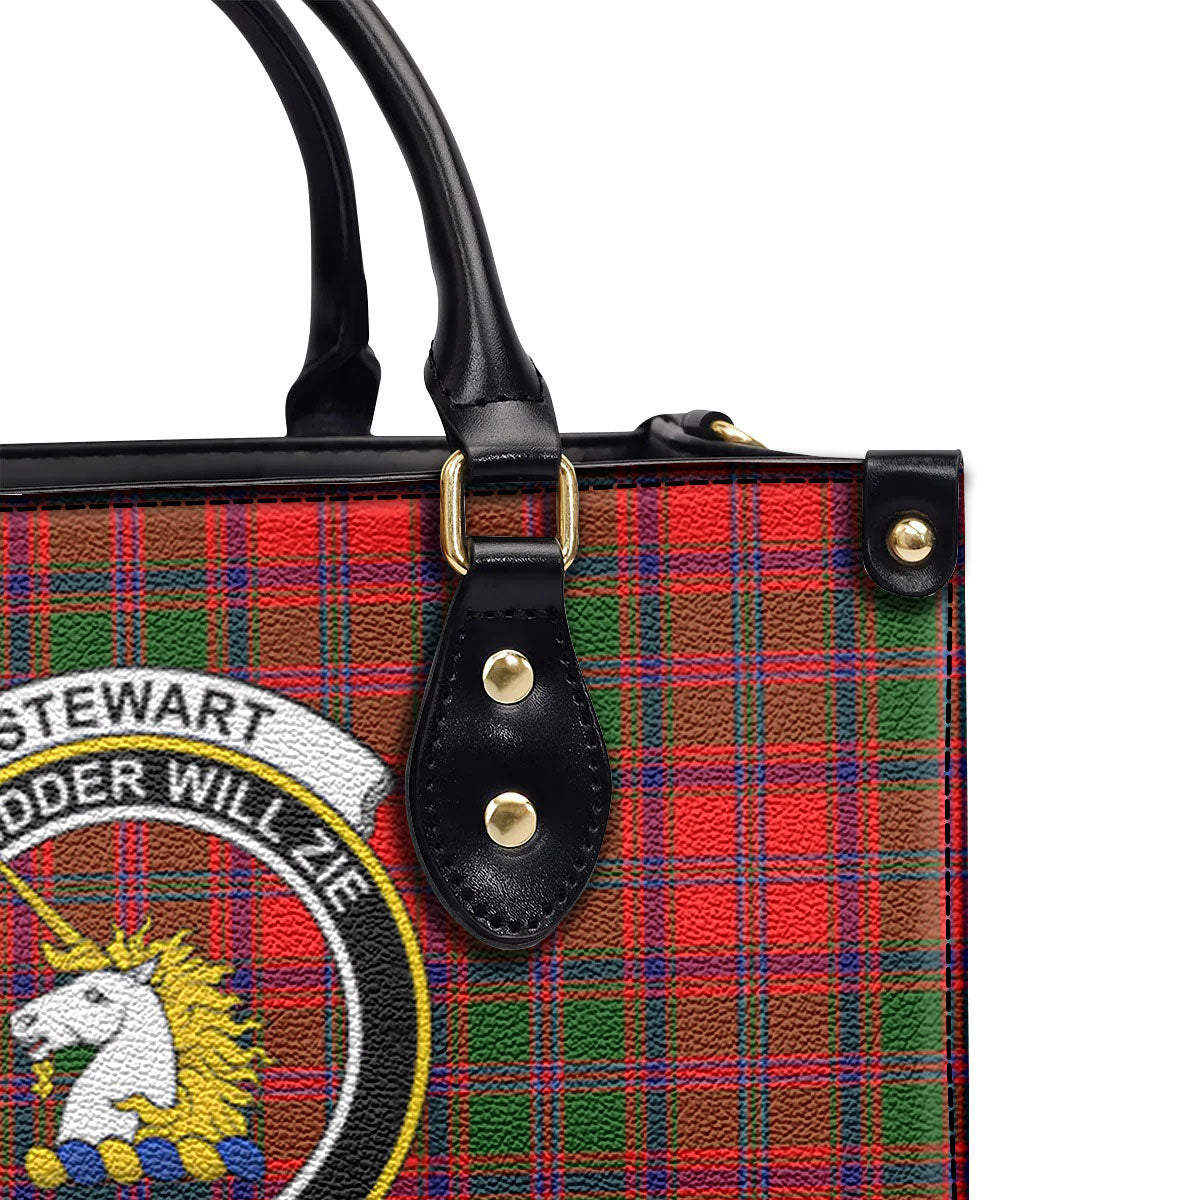 Stewart of Appin Modern Tartan Crest Leather Handbag